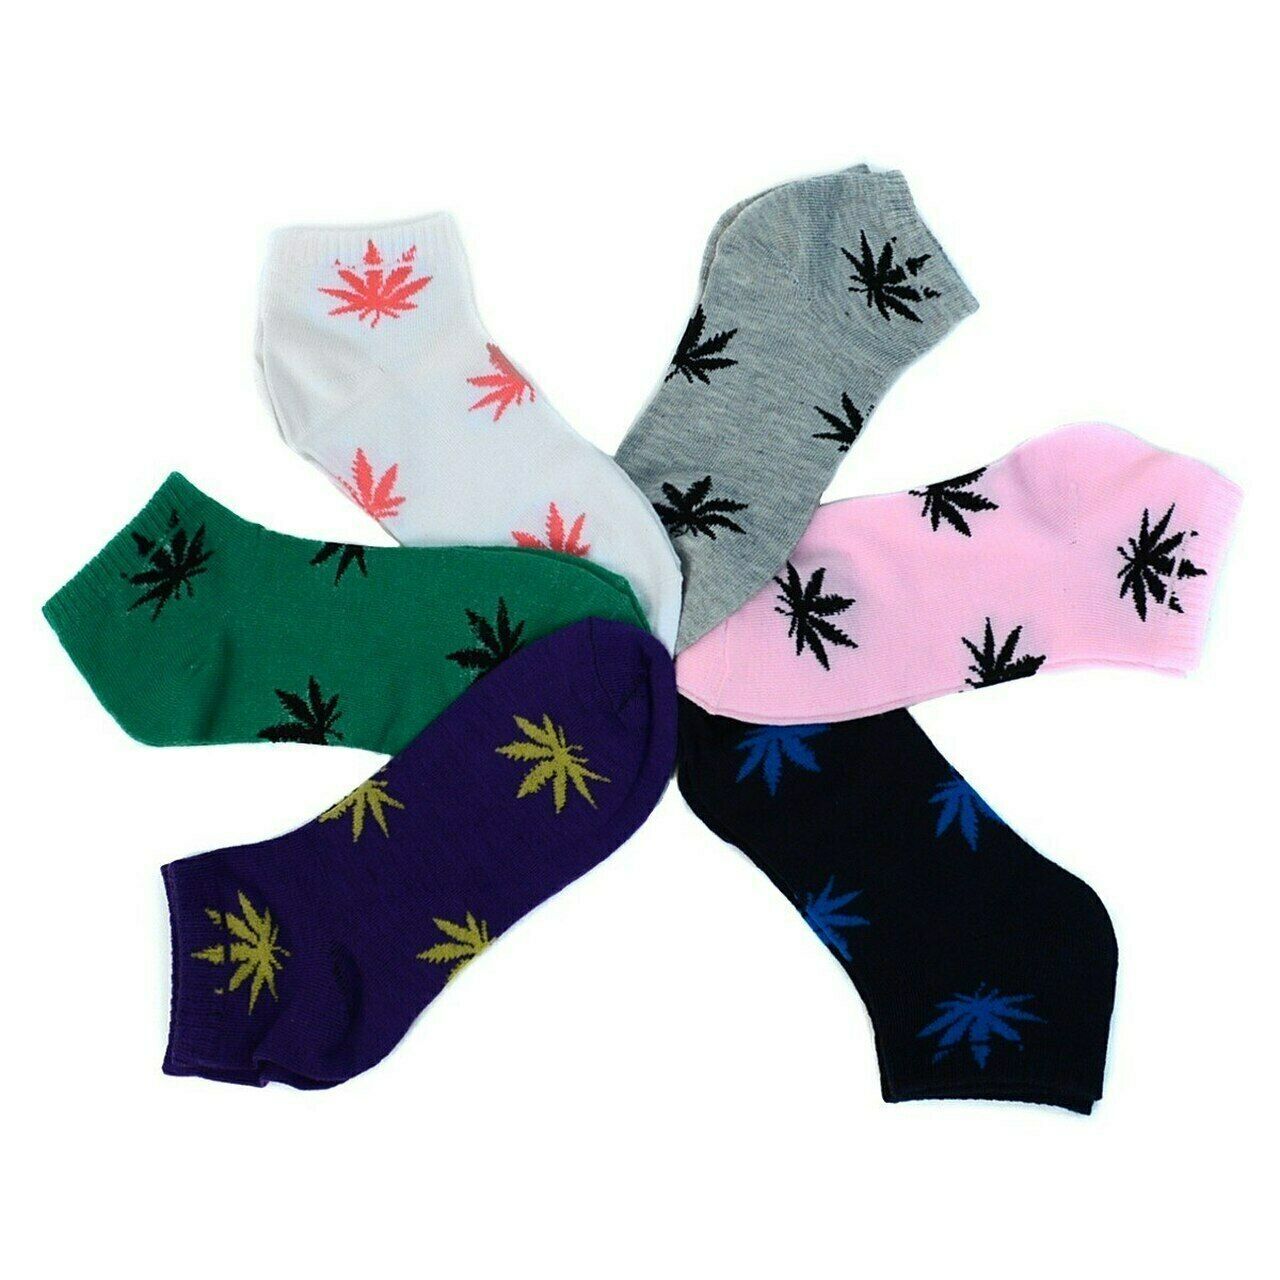 Nollia Women's Low Cut Cotton Blend Socks 6 Pack Marijuana Weed Leaf Print Green